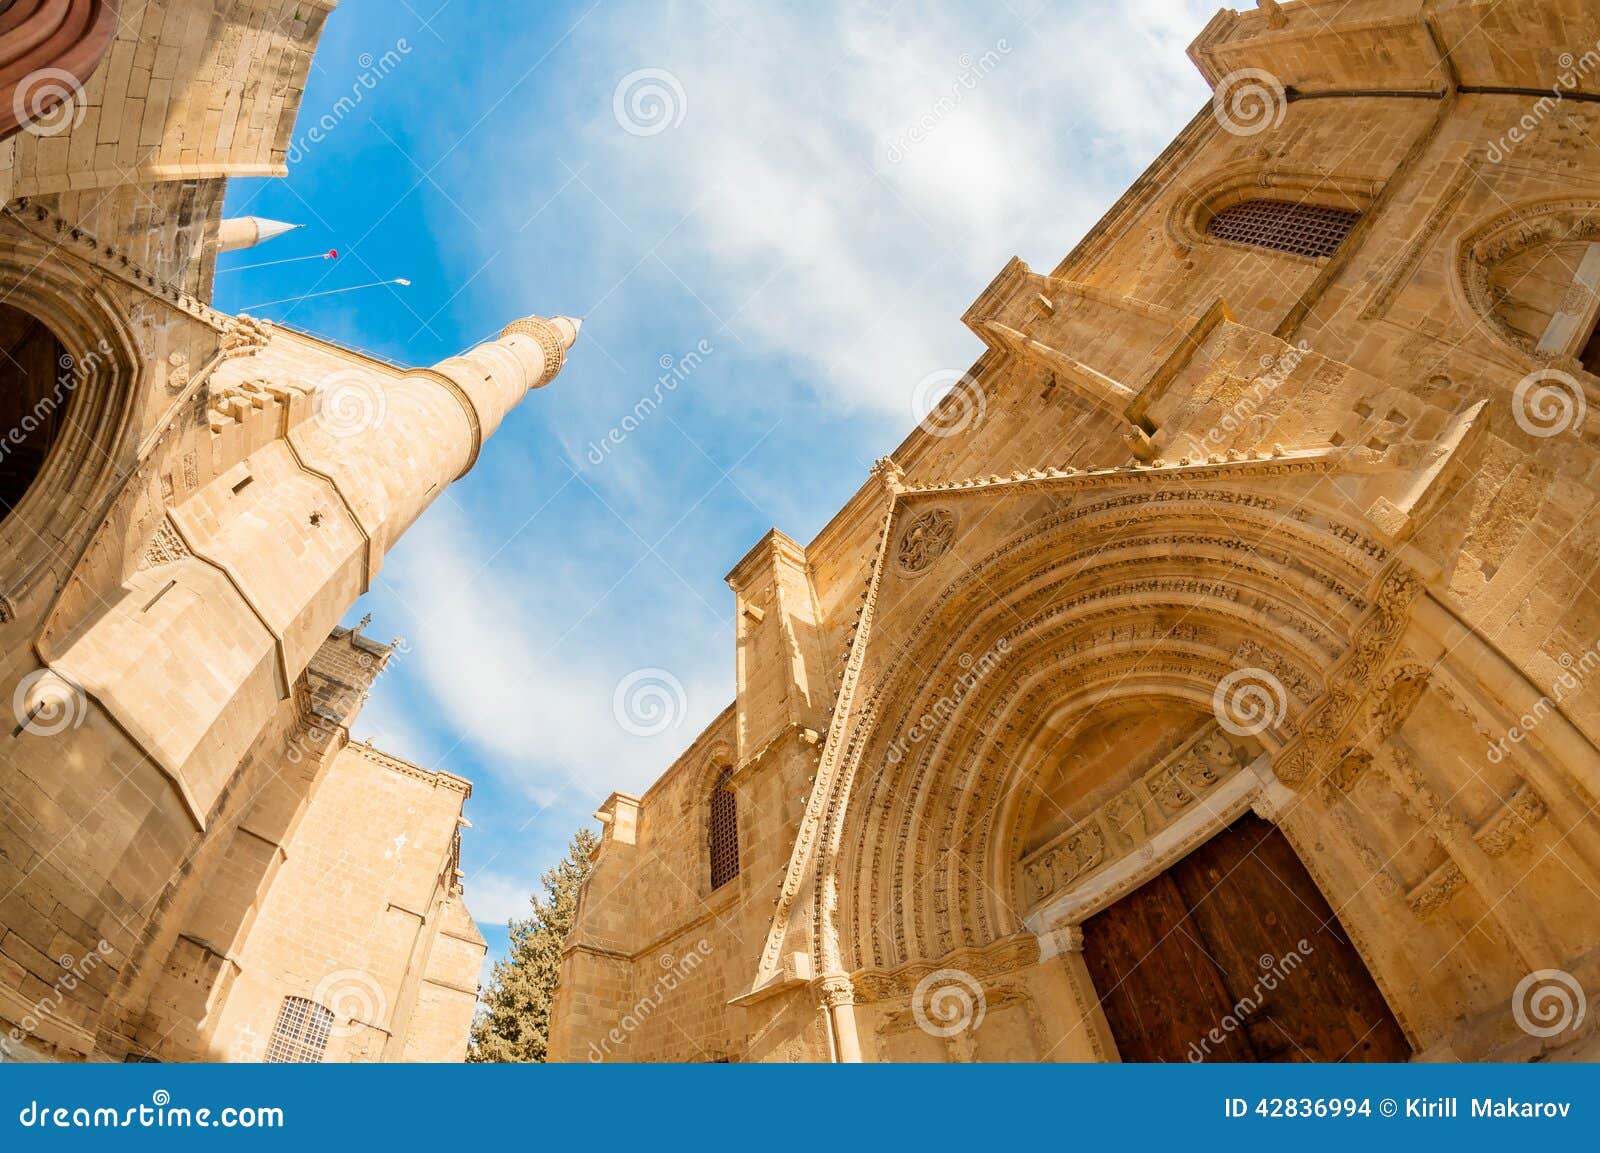 st. nicholas cathedral (lala mustafa mosque). famagusta, cyprus